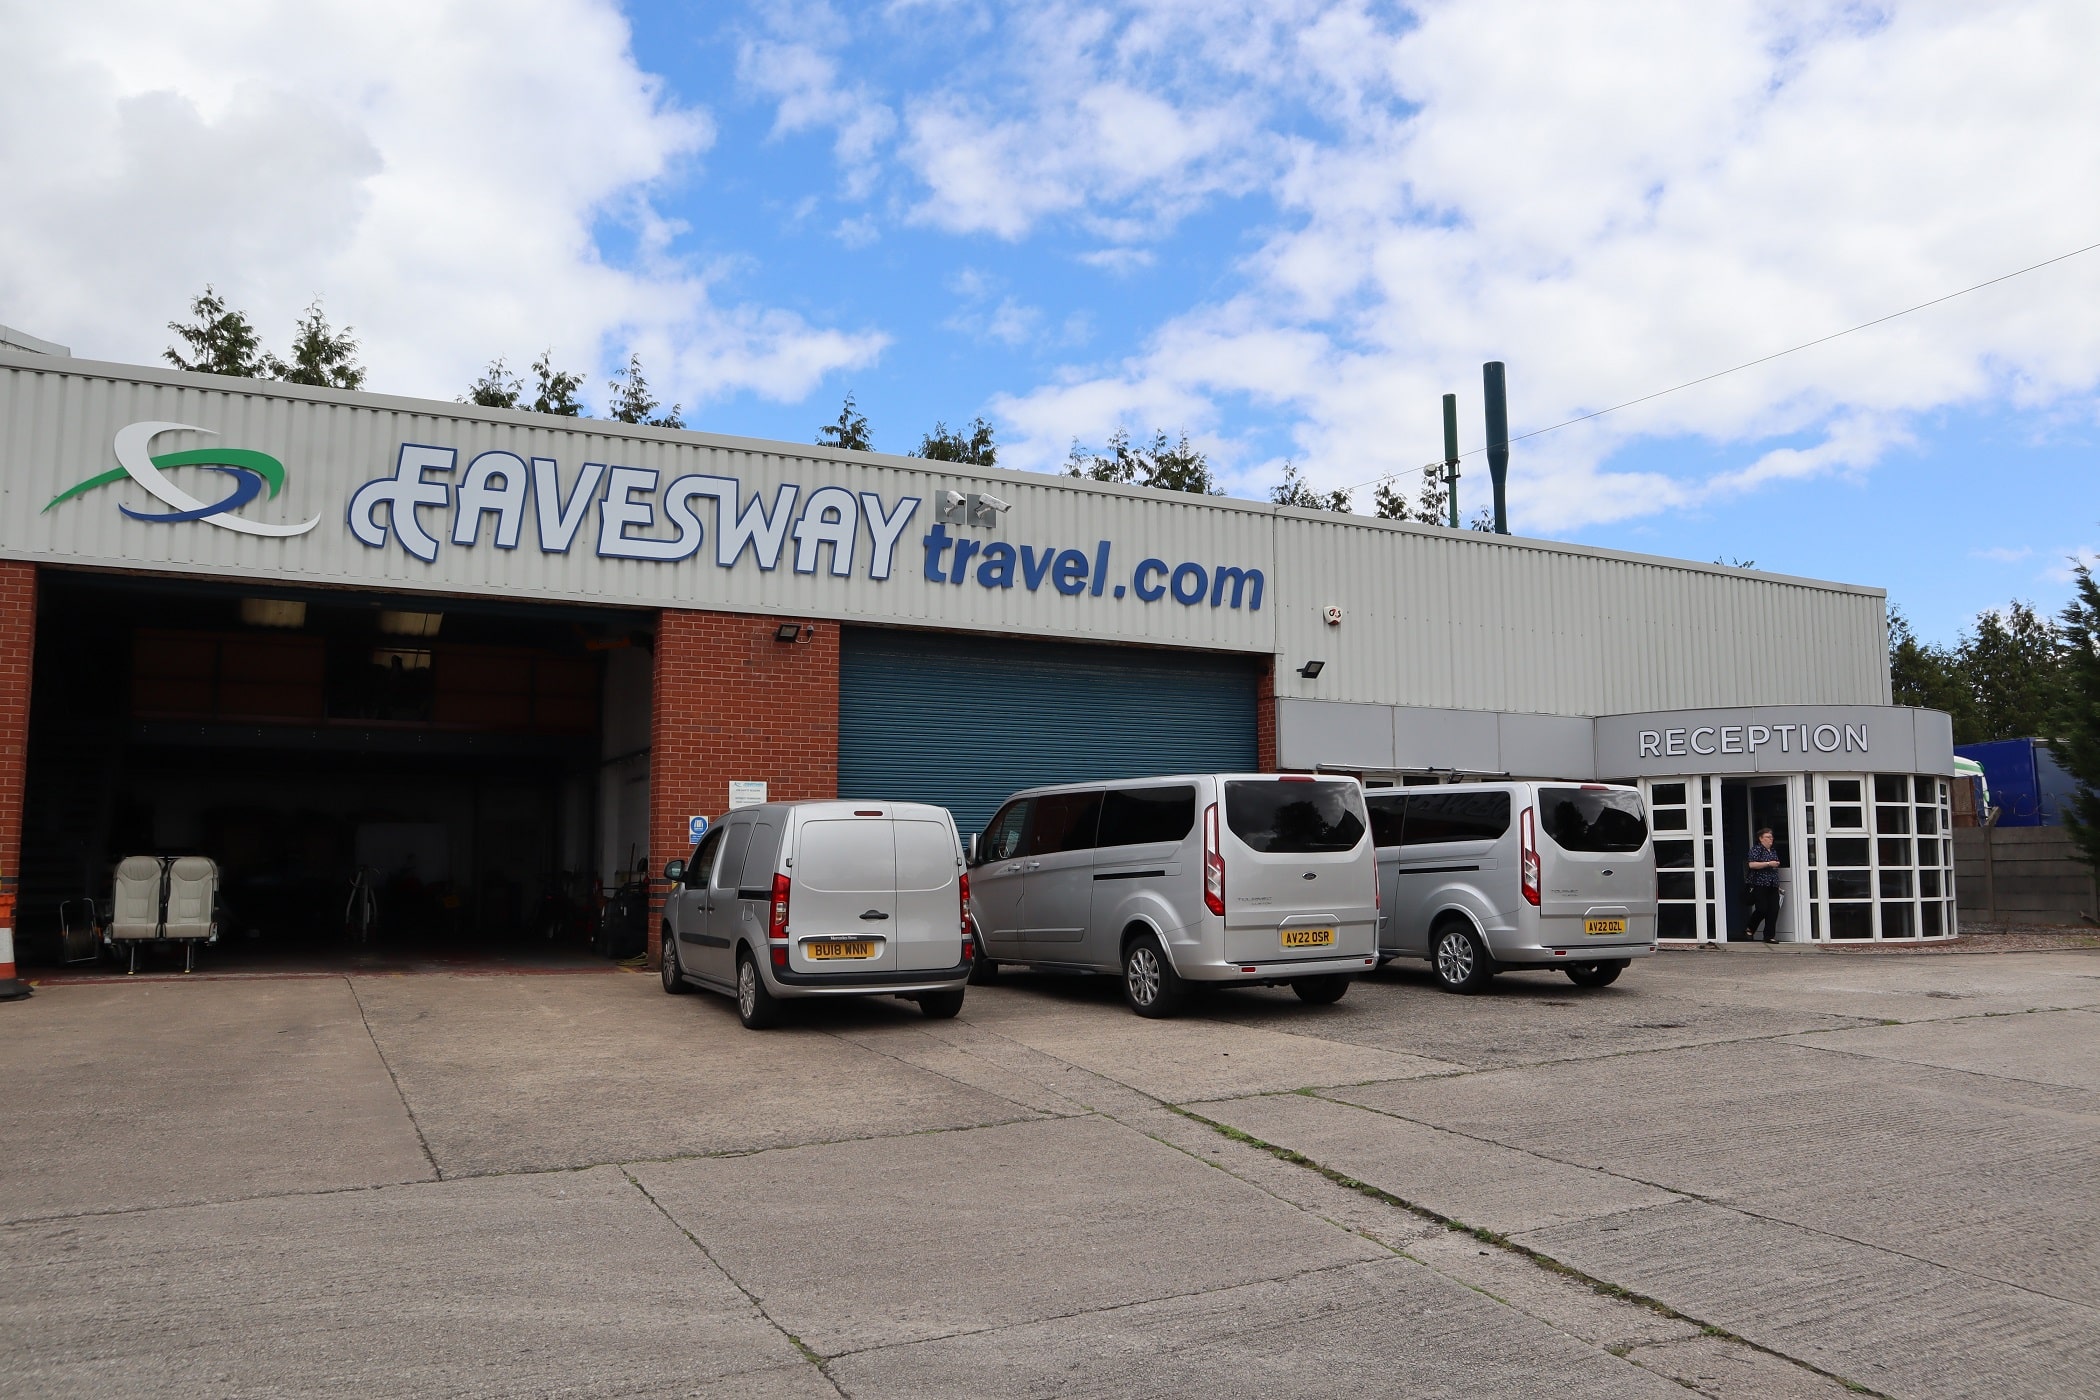 Eavesway Travel base in Ashton-in-Makerfield